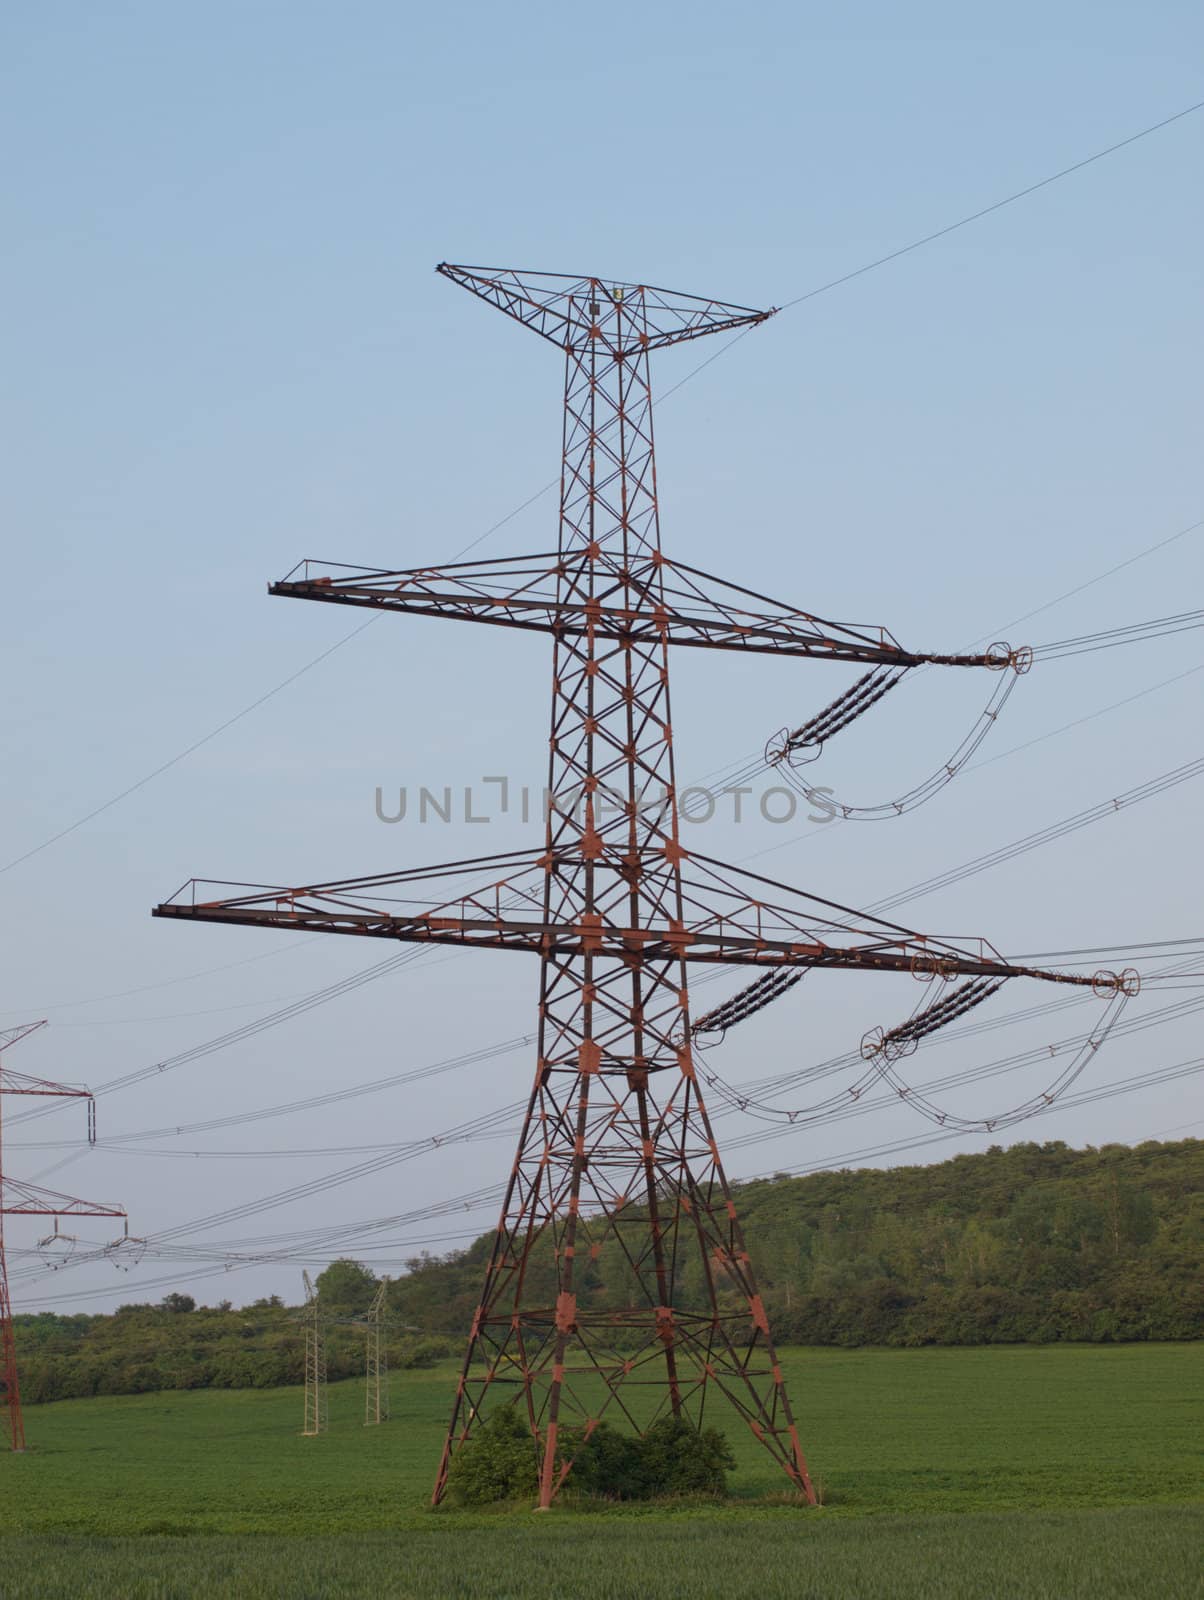 wiring, the big electric pole